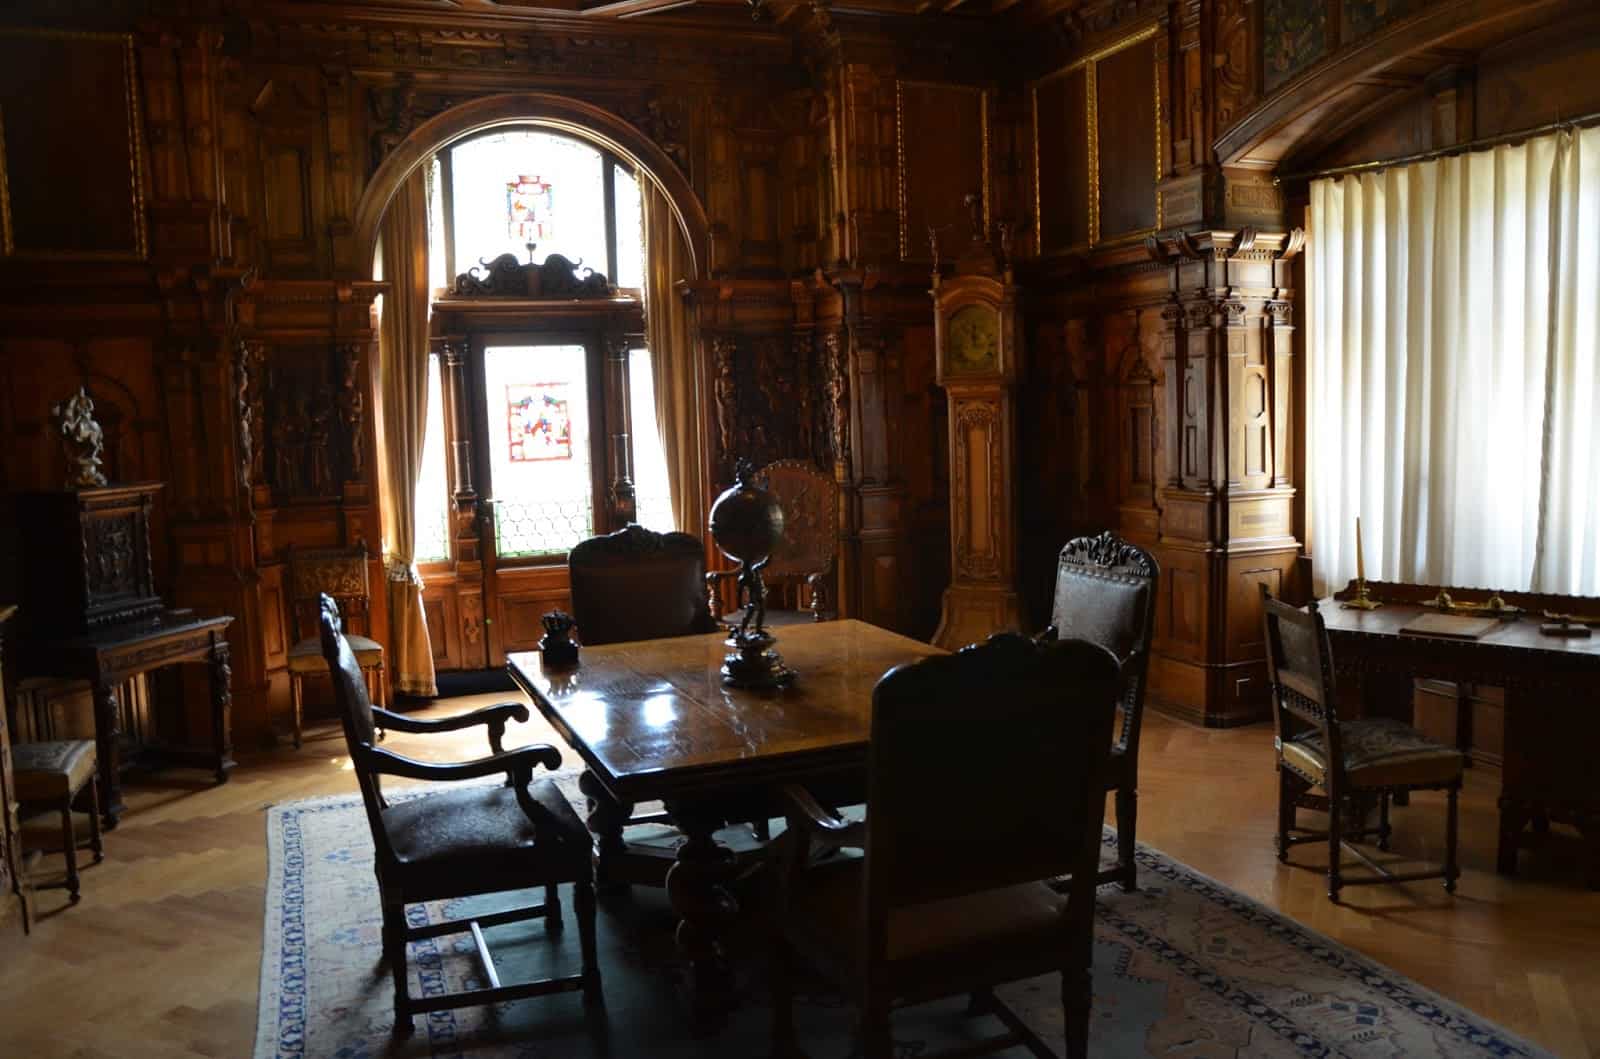 Reception room at Peleș Castle in Sinaia, Romania